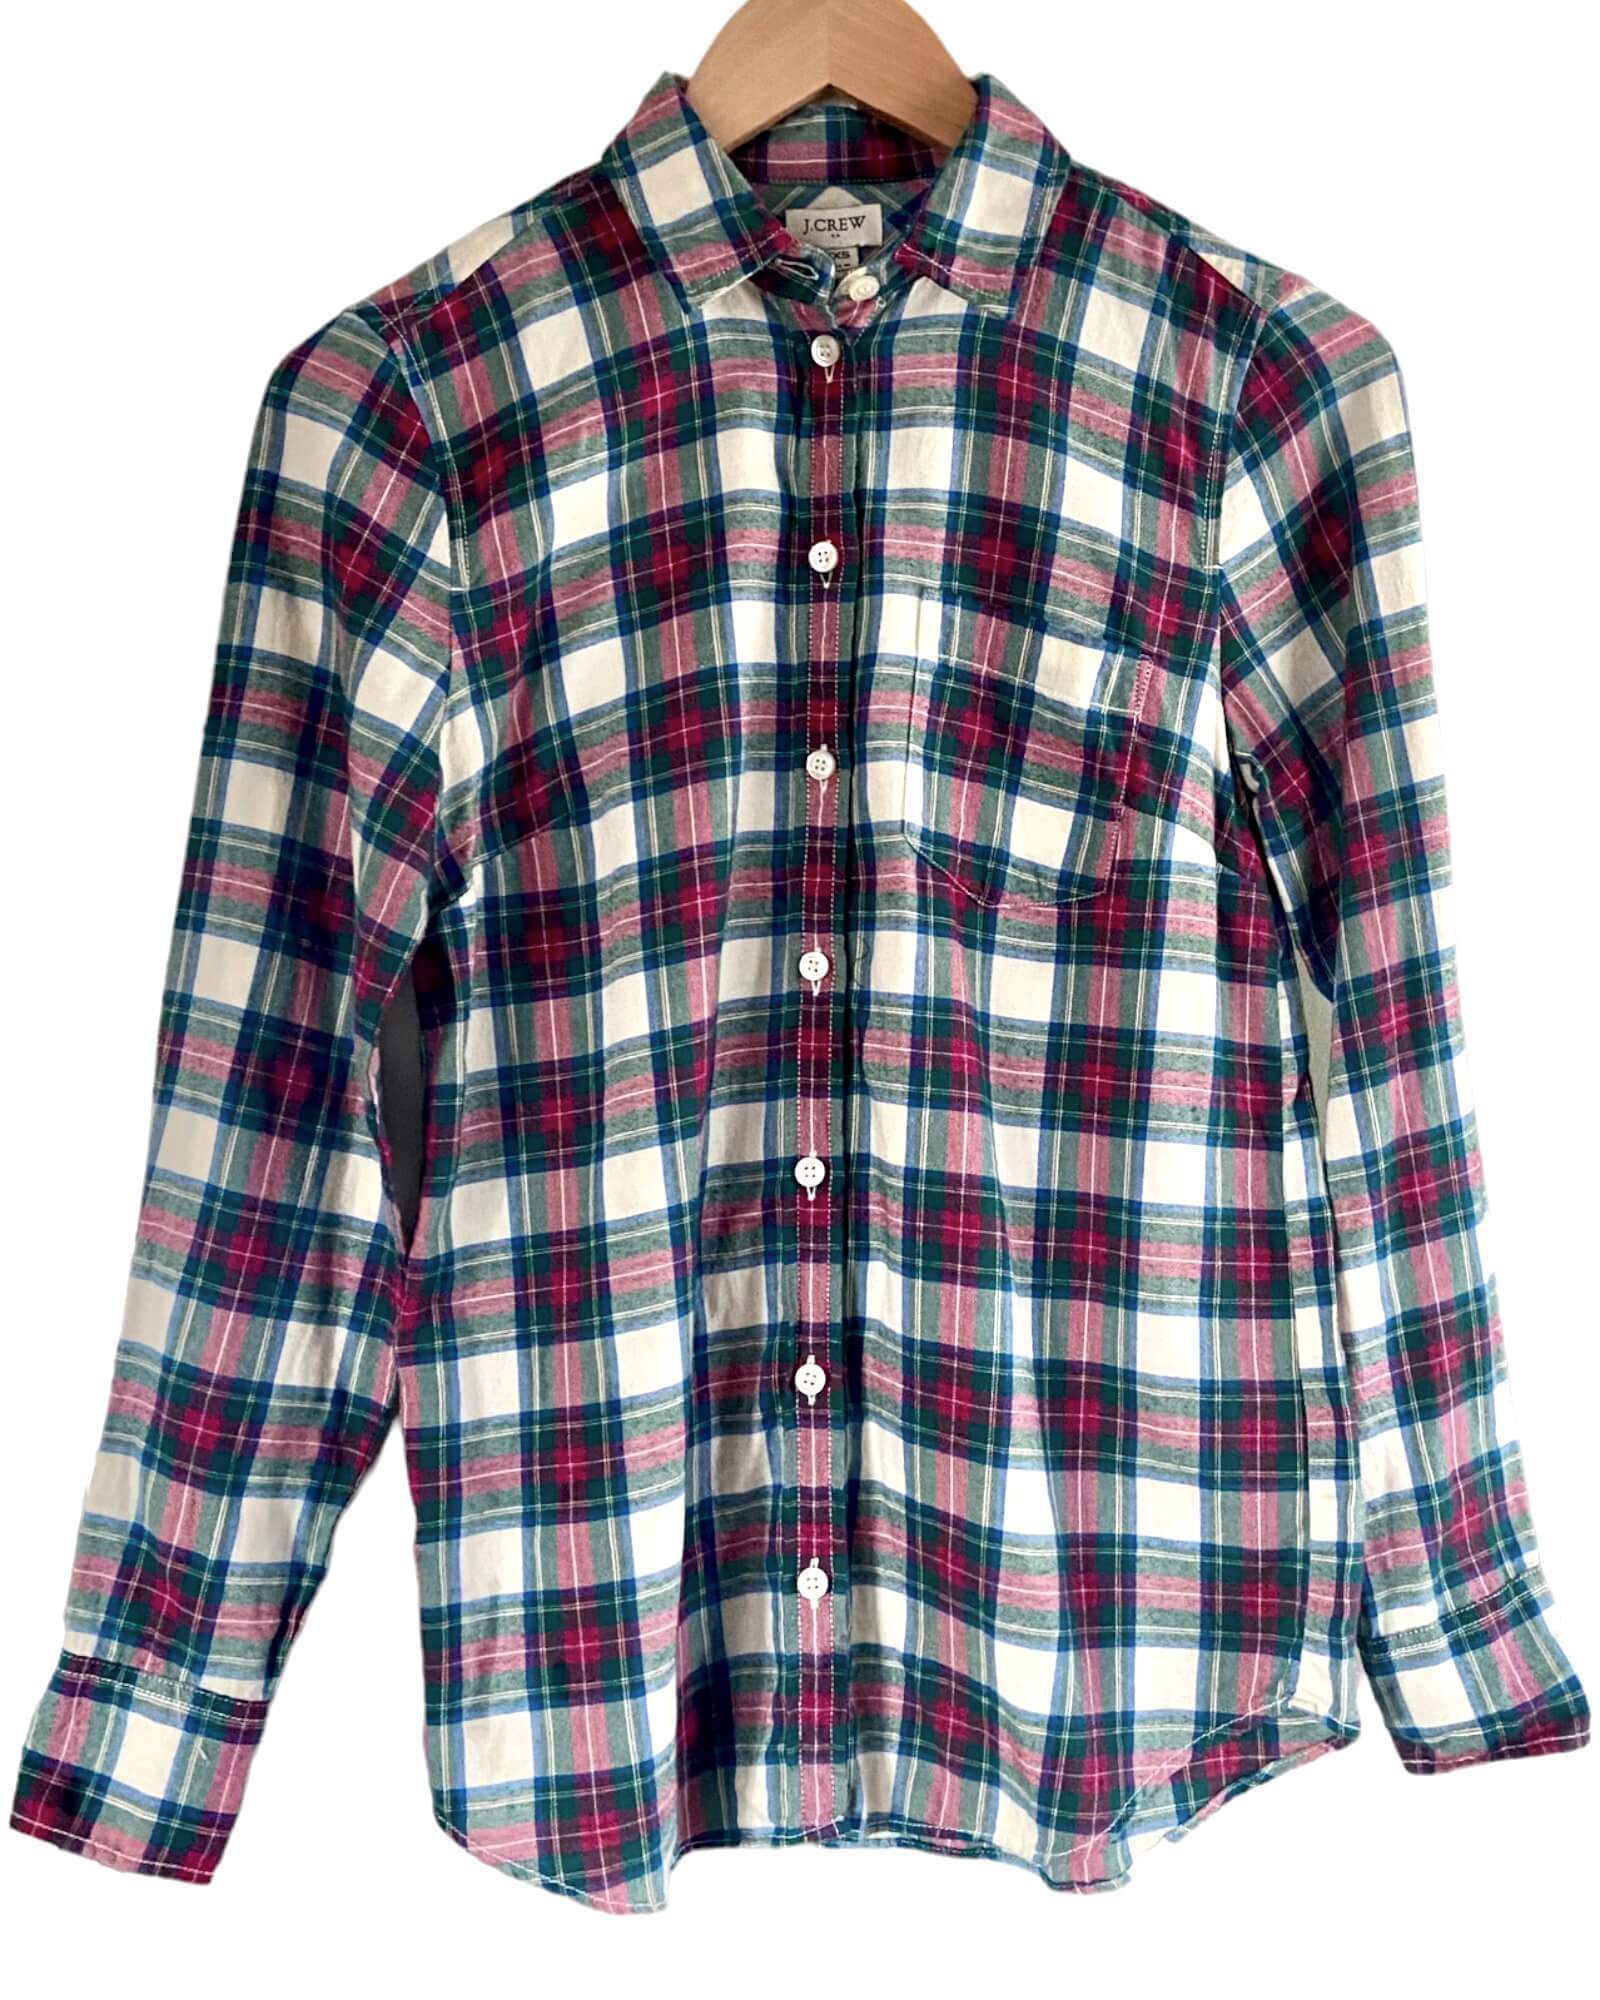 Cool Winter J.CREW plaid flannel boyfriend shirt